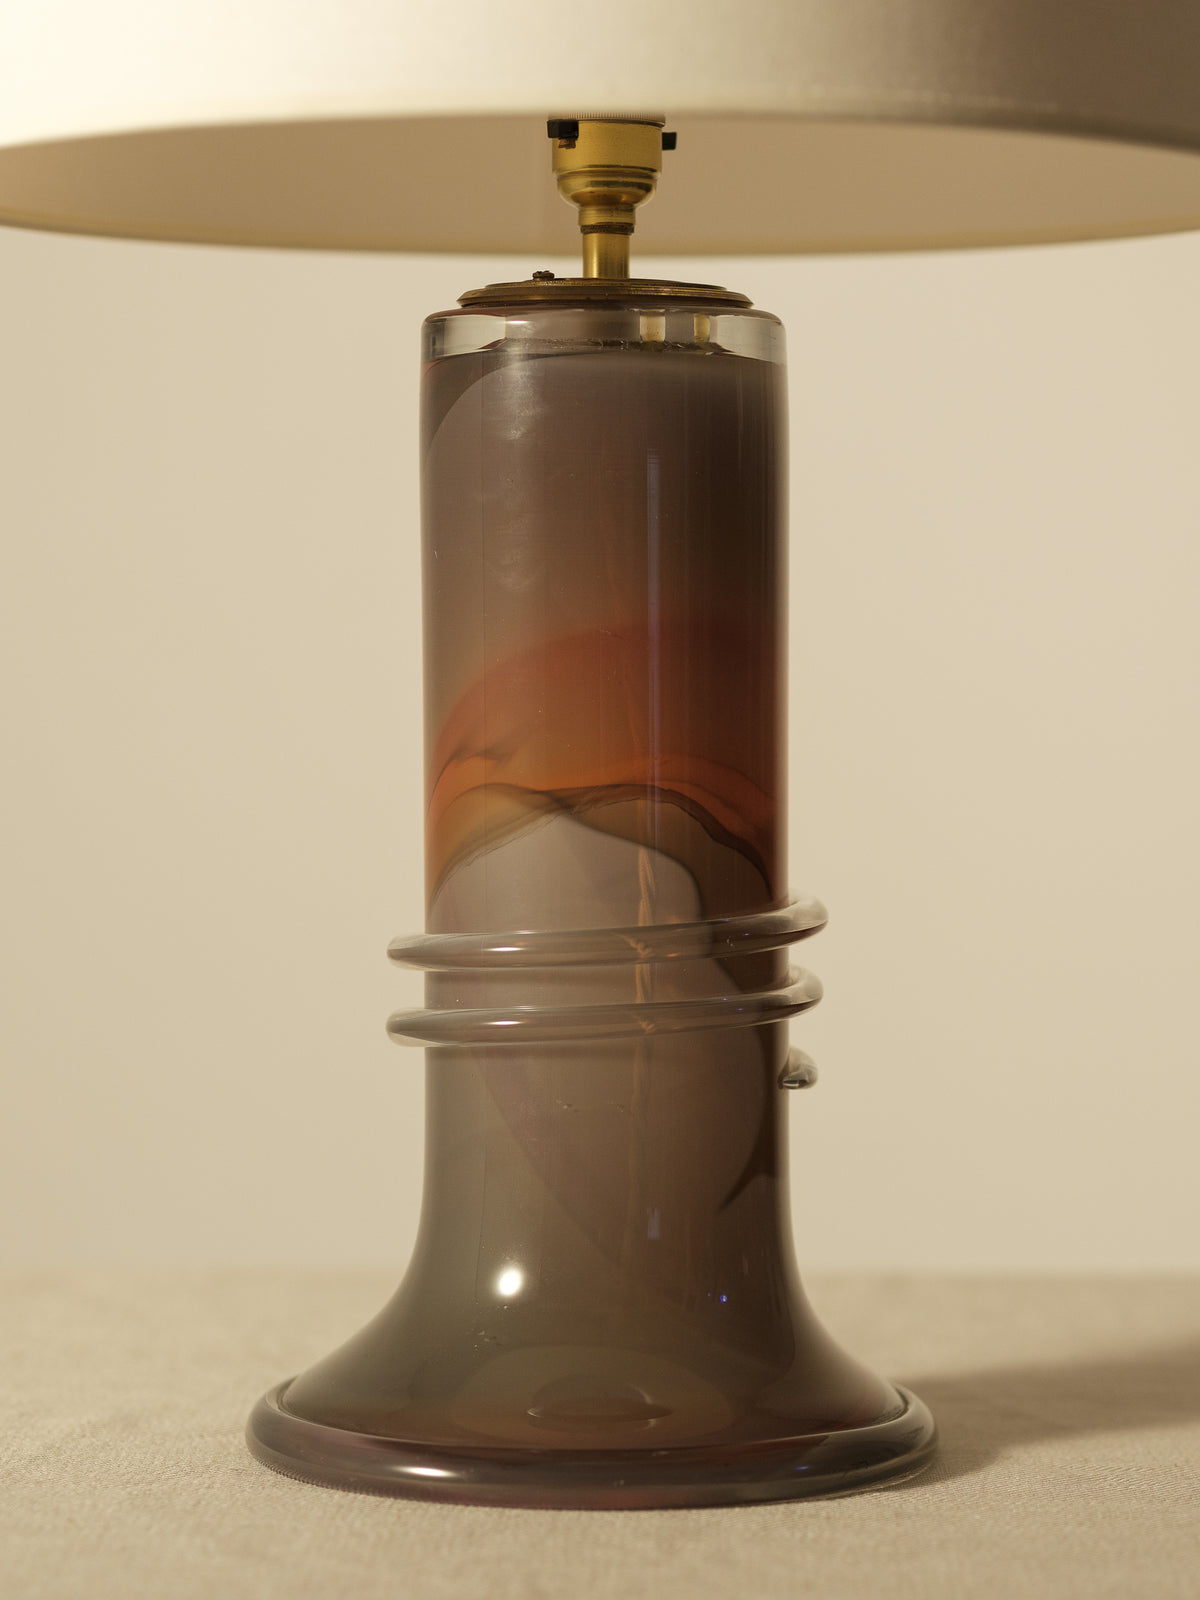 Glass Lamp by Hannalore Dreutler